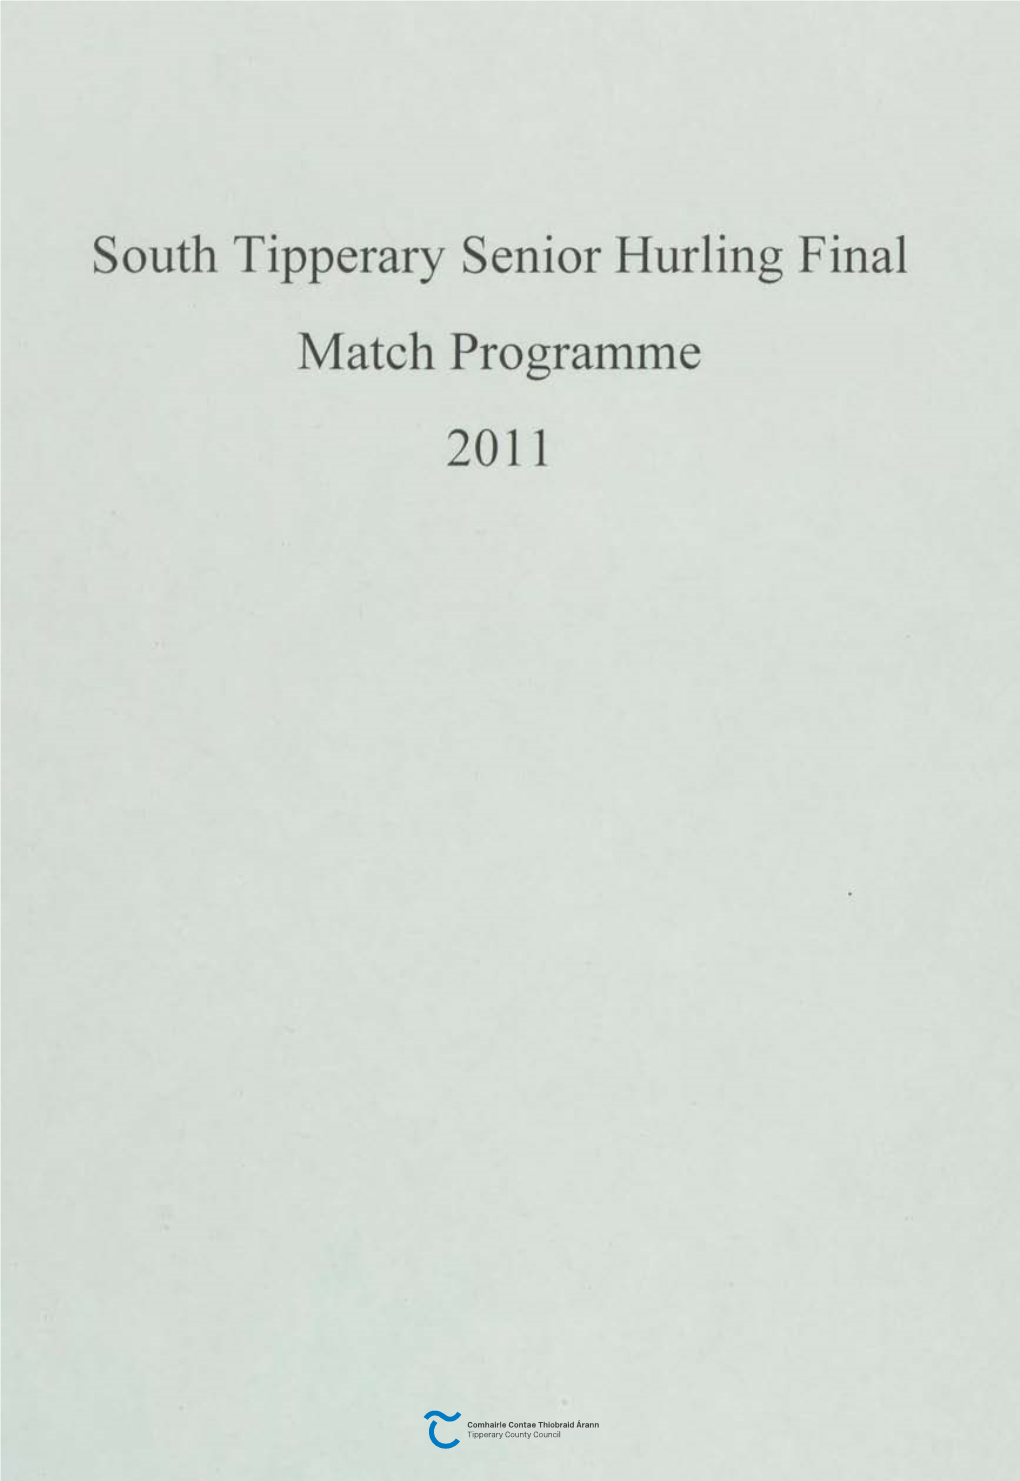 South Tipperary Senior Hurling Final Match Programme 2011